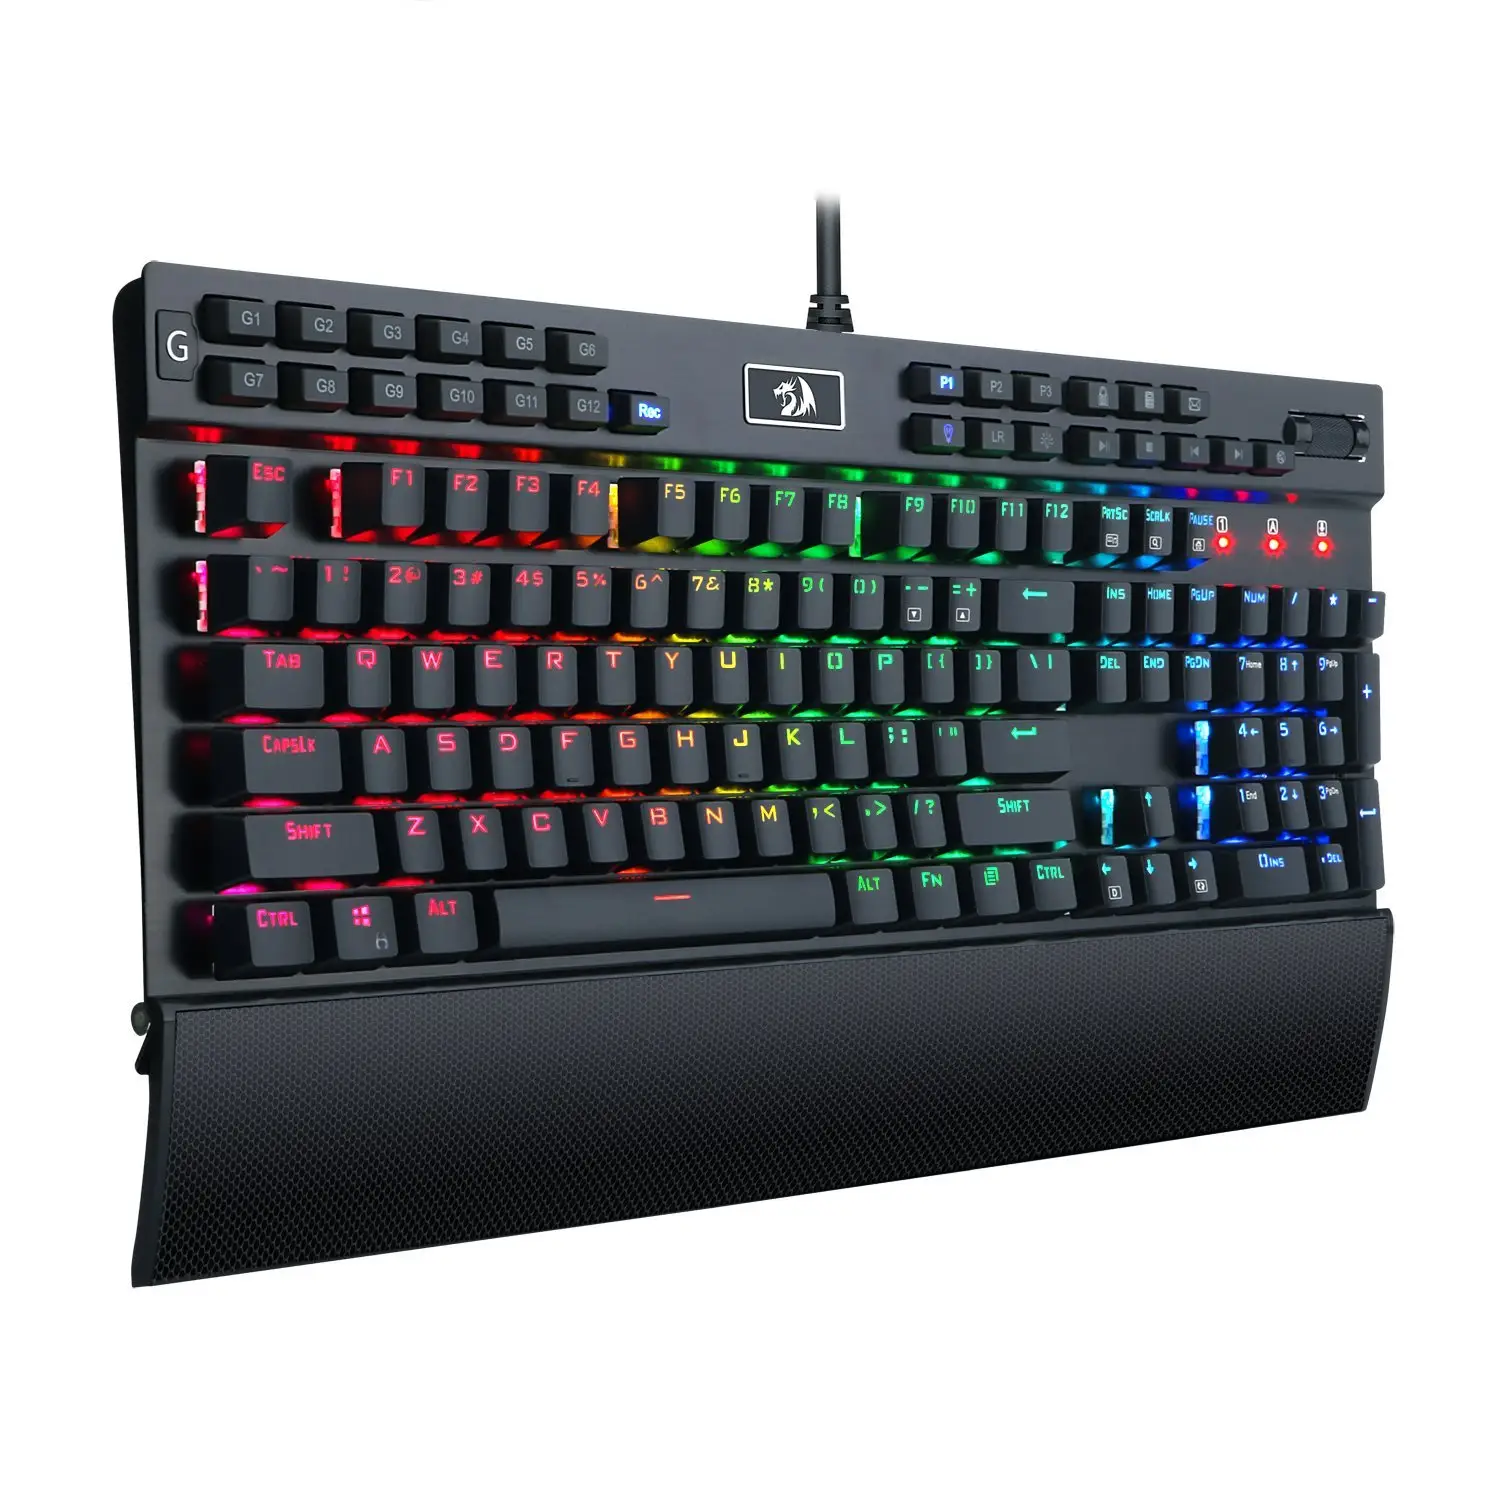 Redragon Yama K550 RGB Computer Multimedia Gamer Mechanical Gaming Keyboard With 131 Keys LED Illuminated Backlit